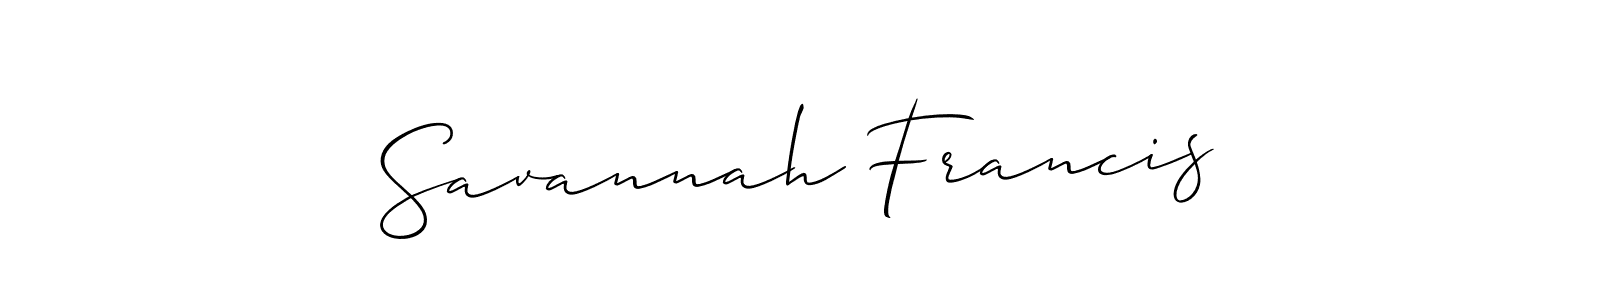 99+ Savannah Francis Name Signature Style Ideas | New eSignature